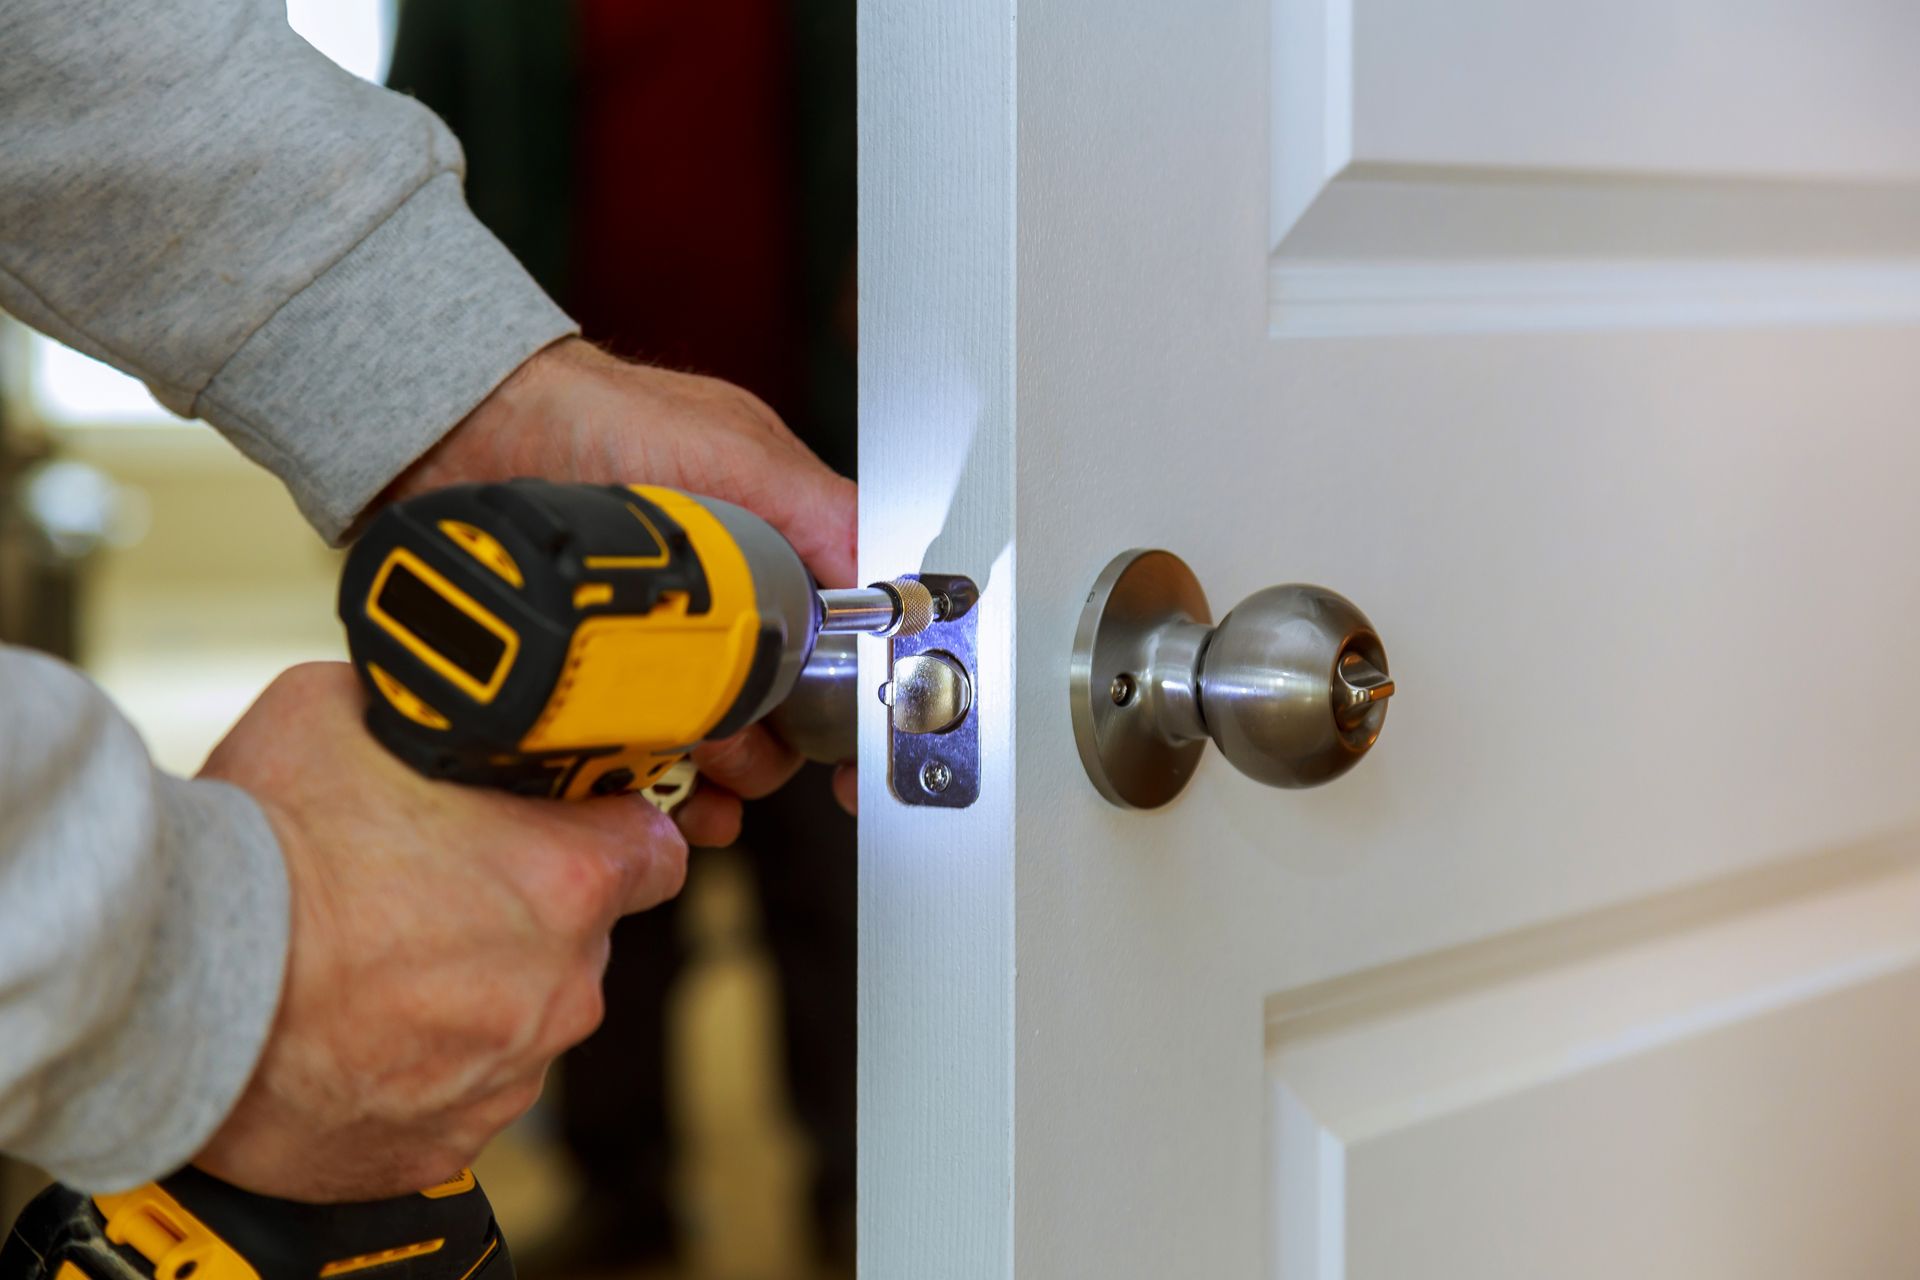 Carpenter Install Door Lock Using Screwdriver At Home